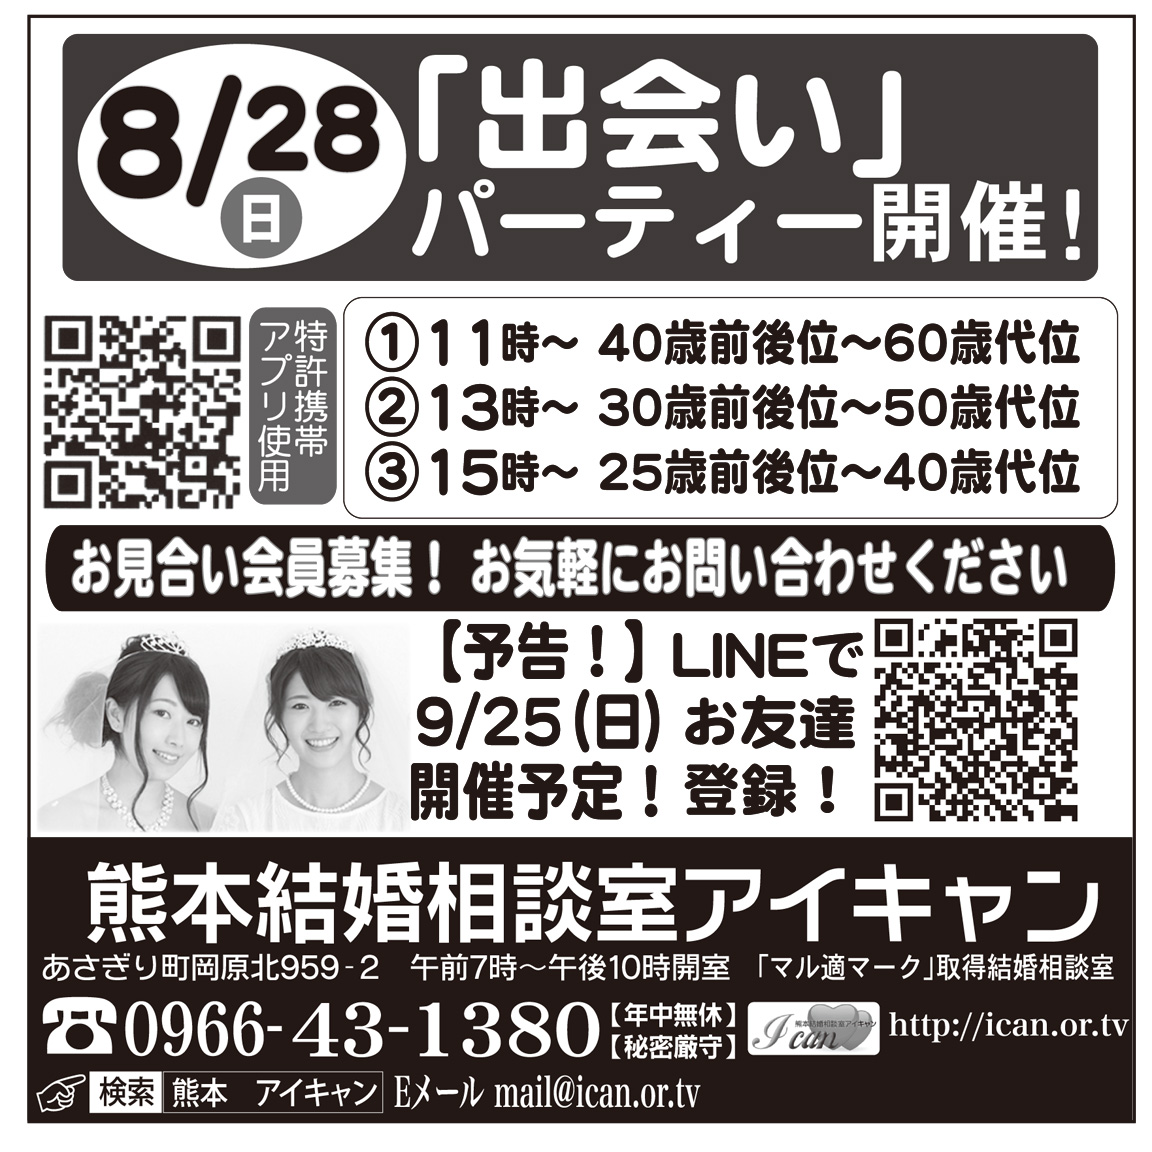 http://ican.or.tv/news/ICAN-22-08-28-hitoyoshi-.jpg